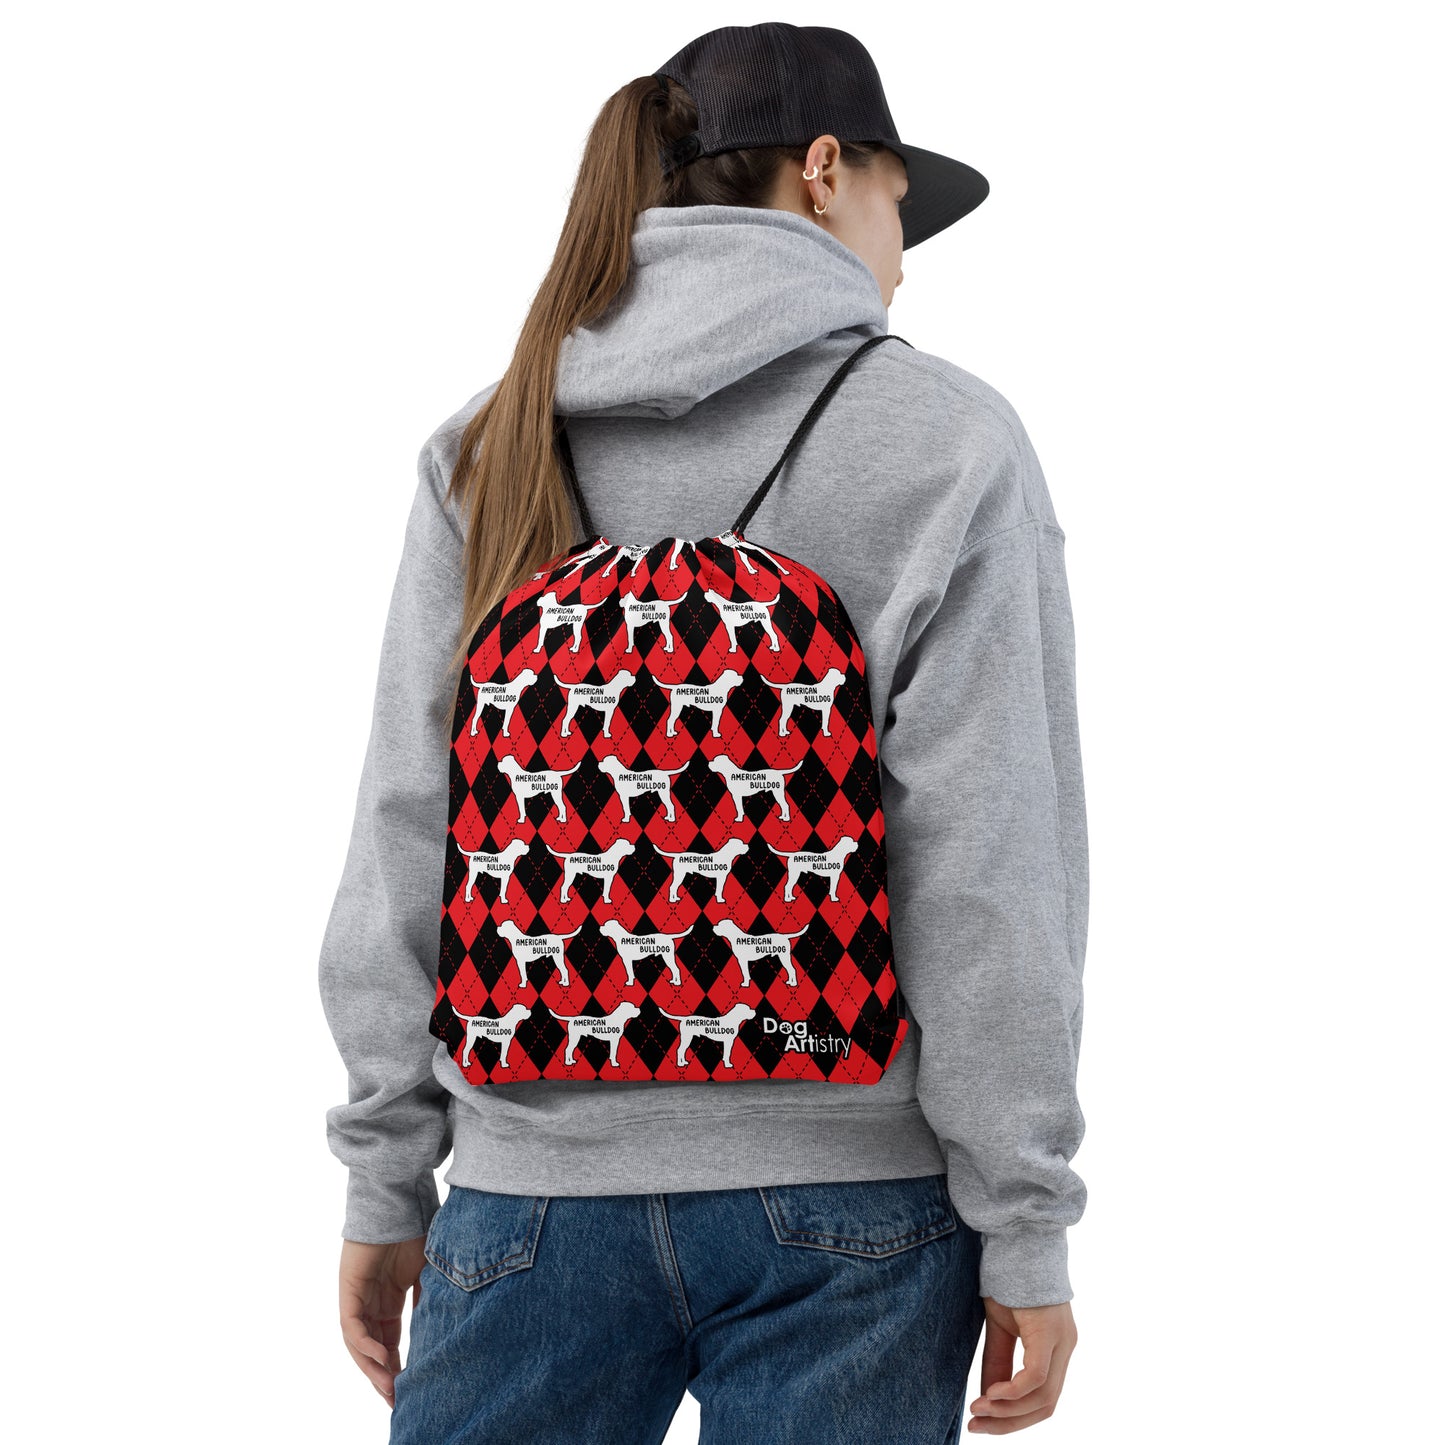 American Bulldog Argyle Red and Black Drawstring bag